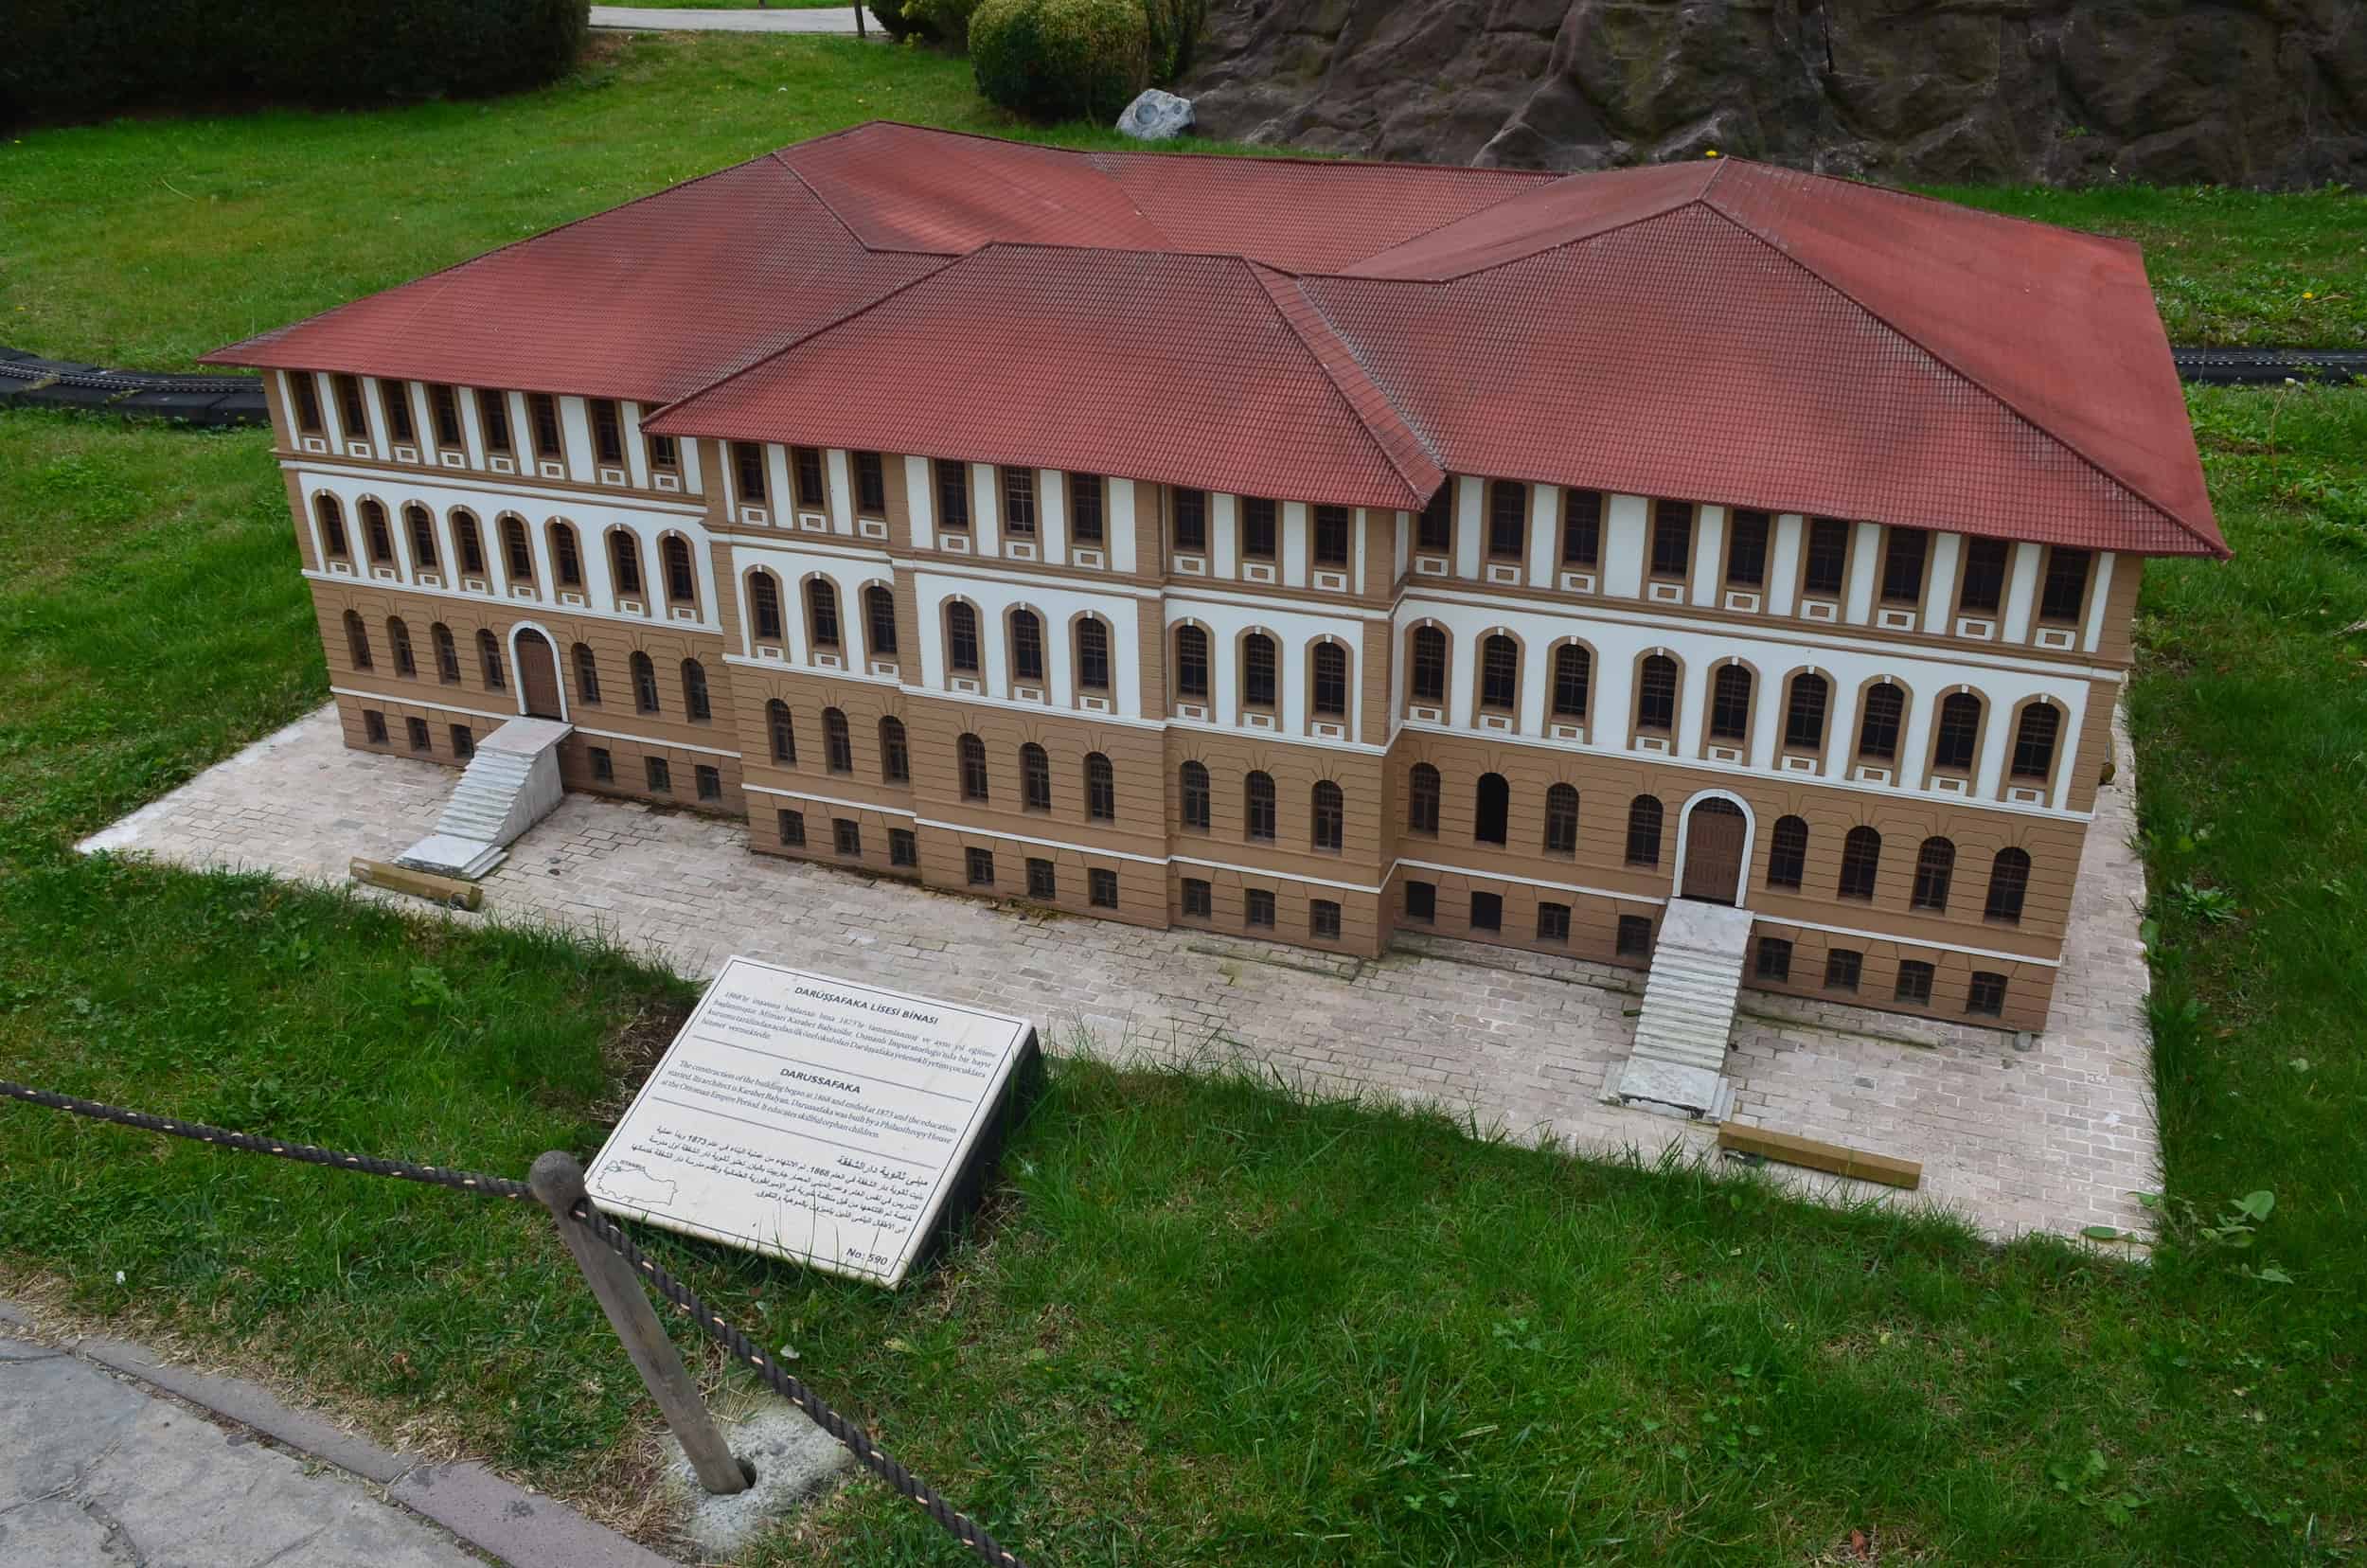 Model of Darüşşafaka High School, Çarşamba, 19th century